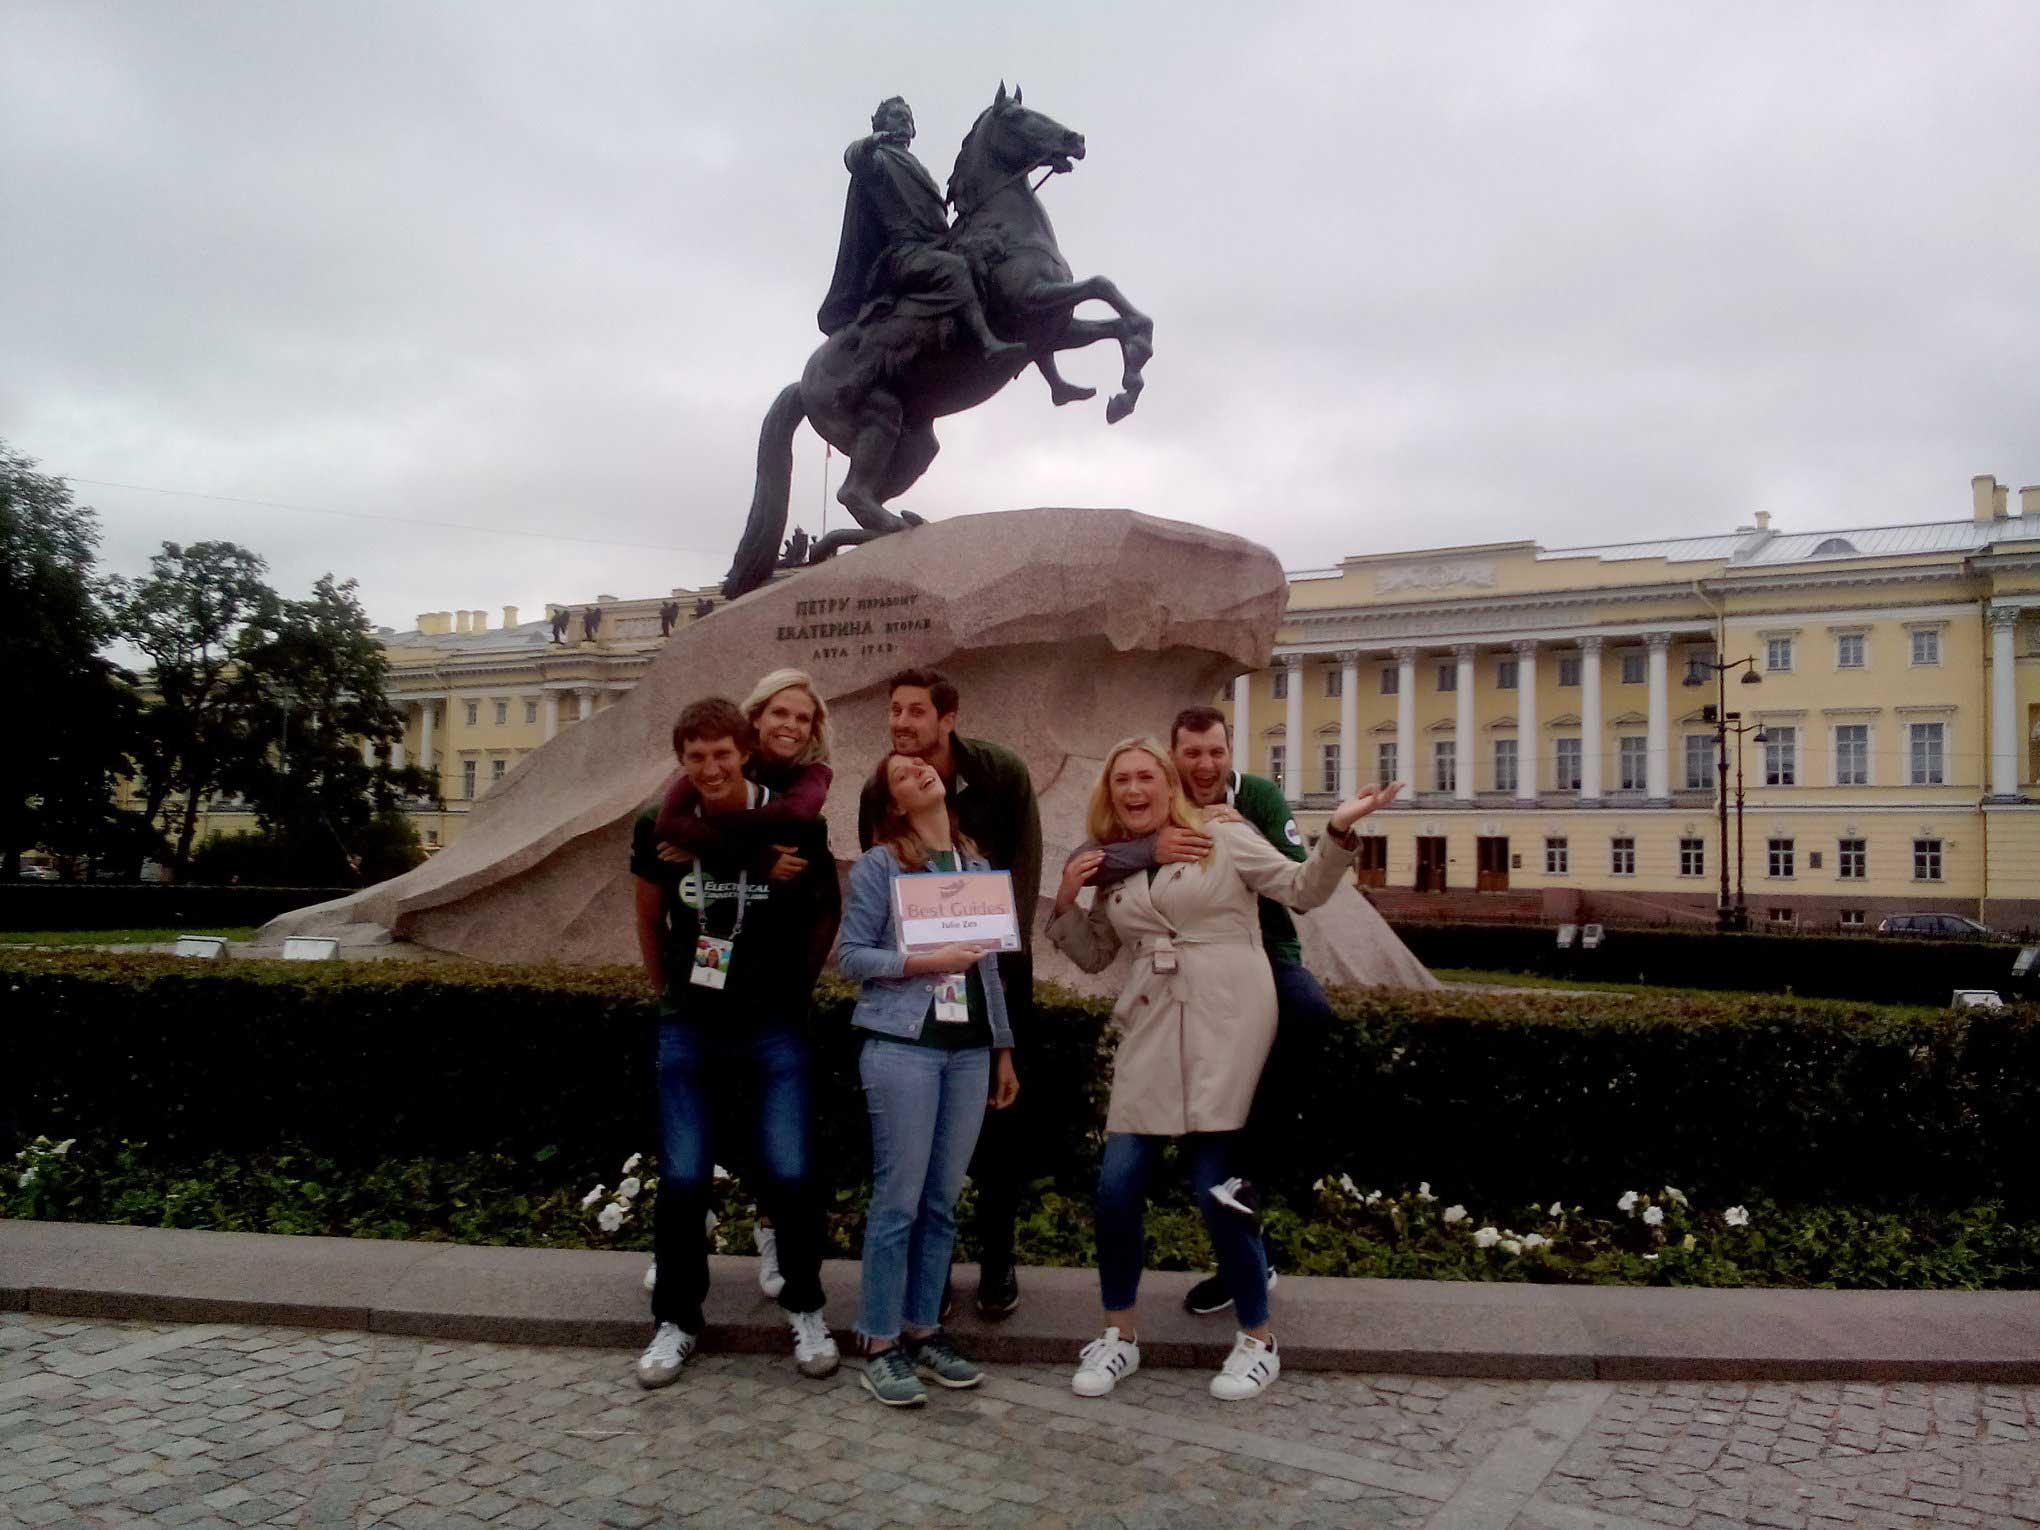 St Petersburg Russia tours: Walk in St. Petersburg - the famous Bronze Horseman, or...